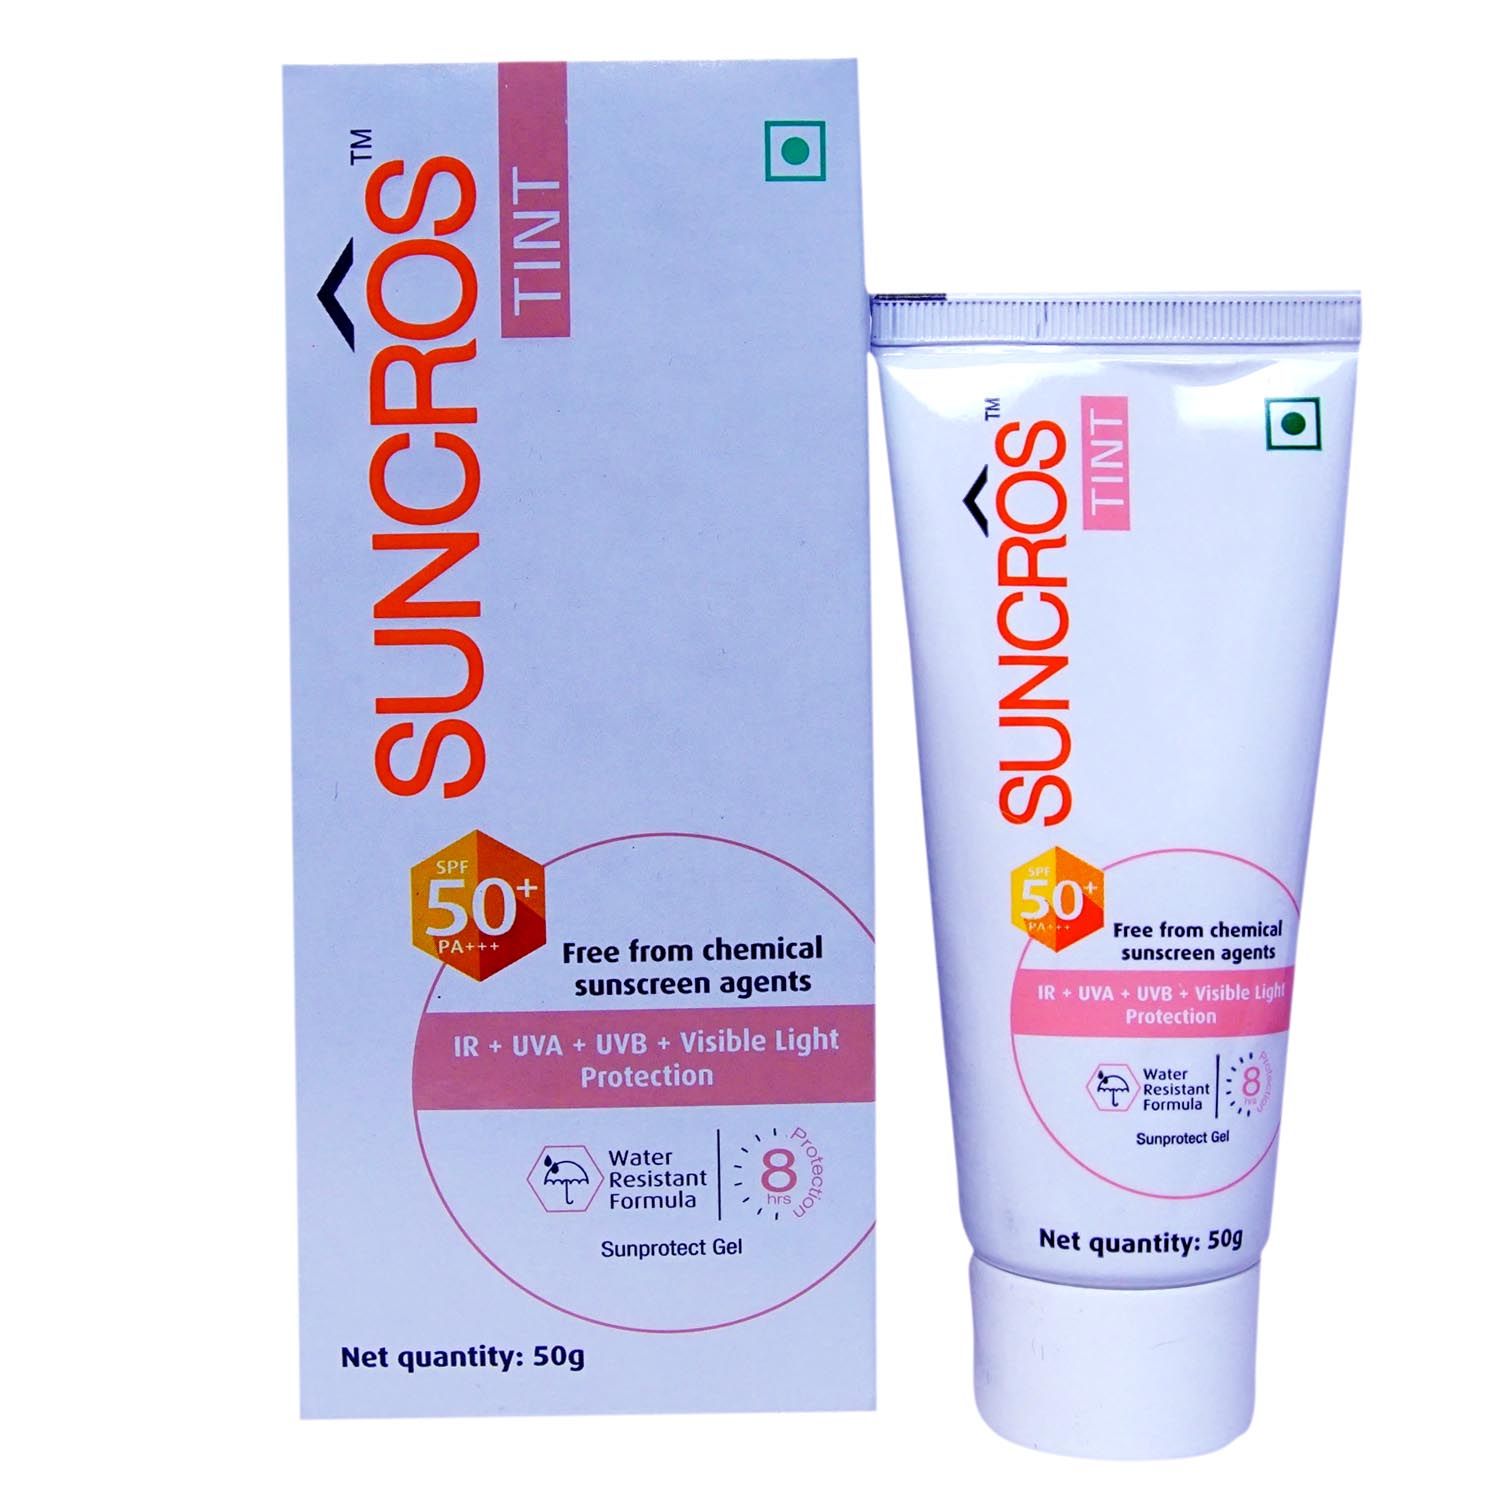 Suncros Tint Sunprotect Gel SPF 50+ PA+++ IR+UVA+UVB, 50 gm, Pack of 1 Gel